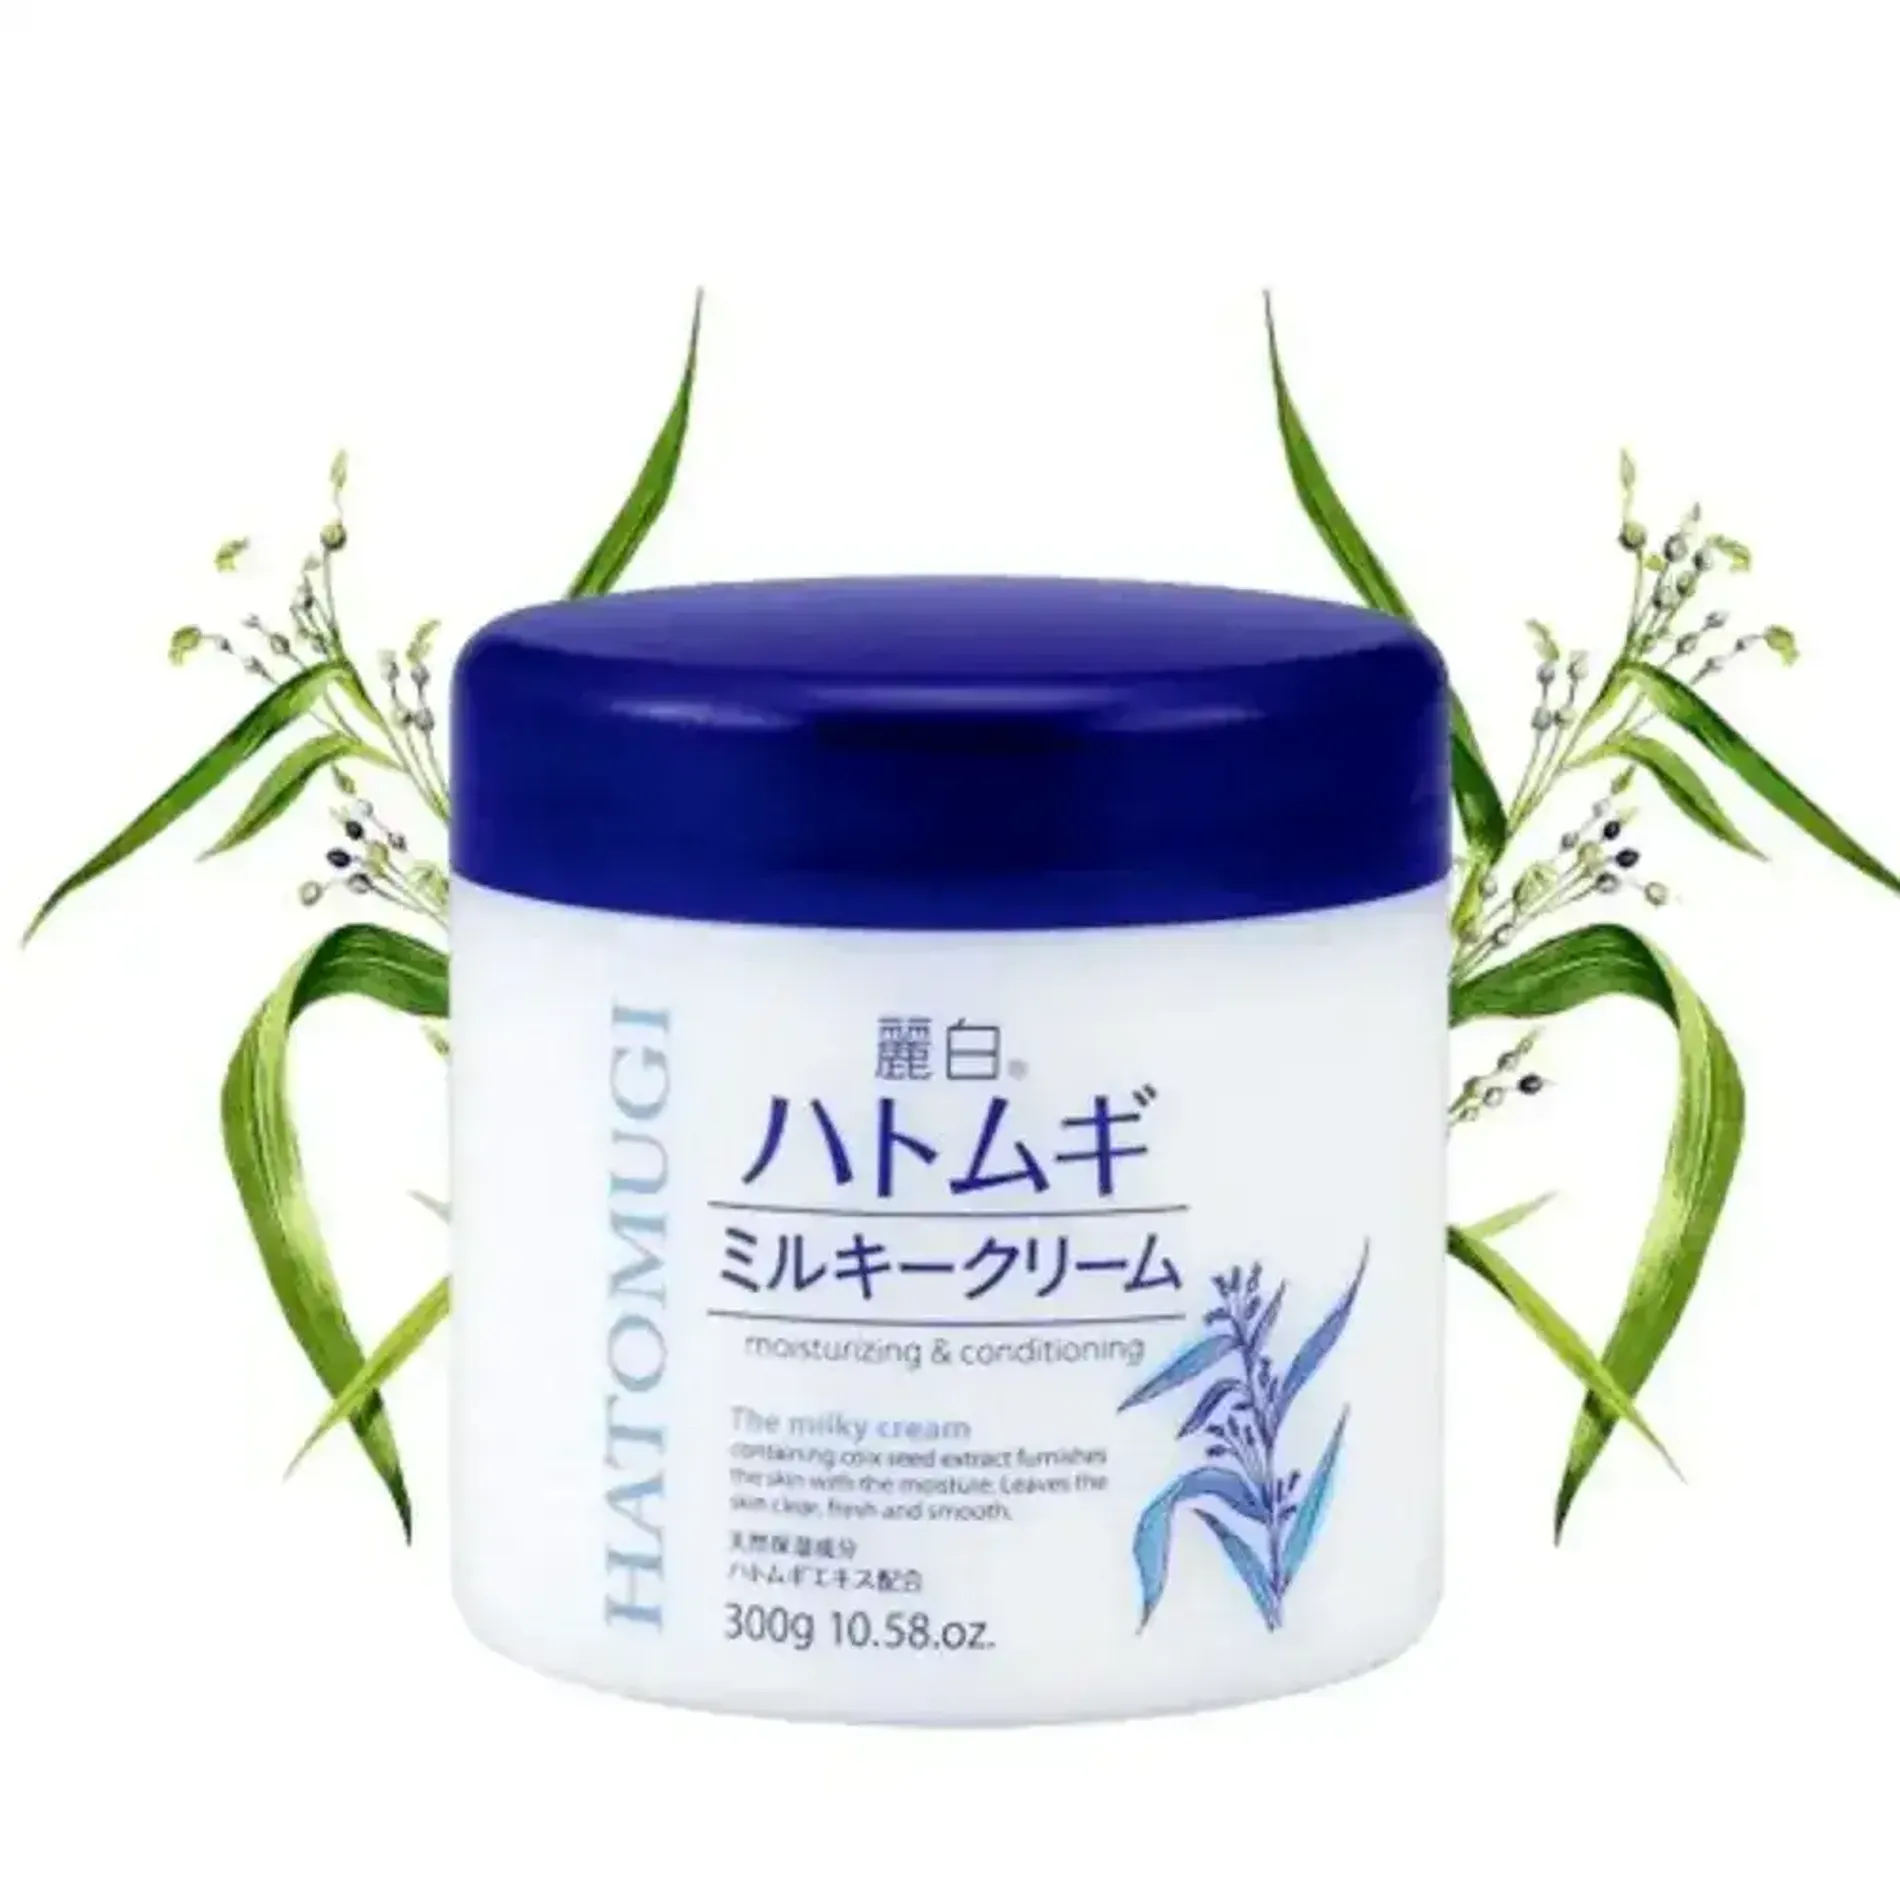 kem-duong-lam-min-da-hatomugi-moisturizing-conditioning-gel-300g-2